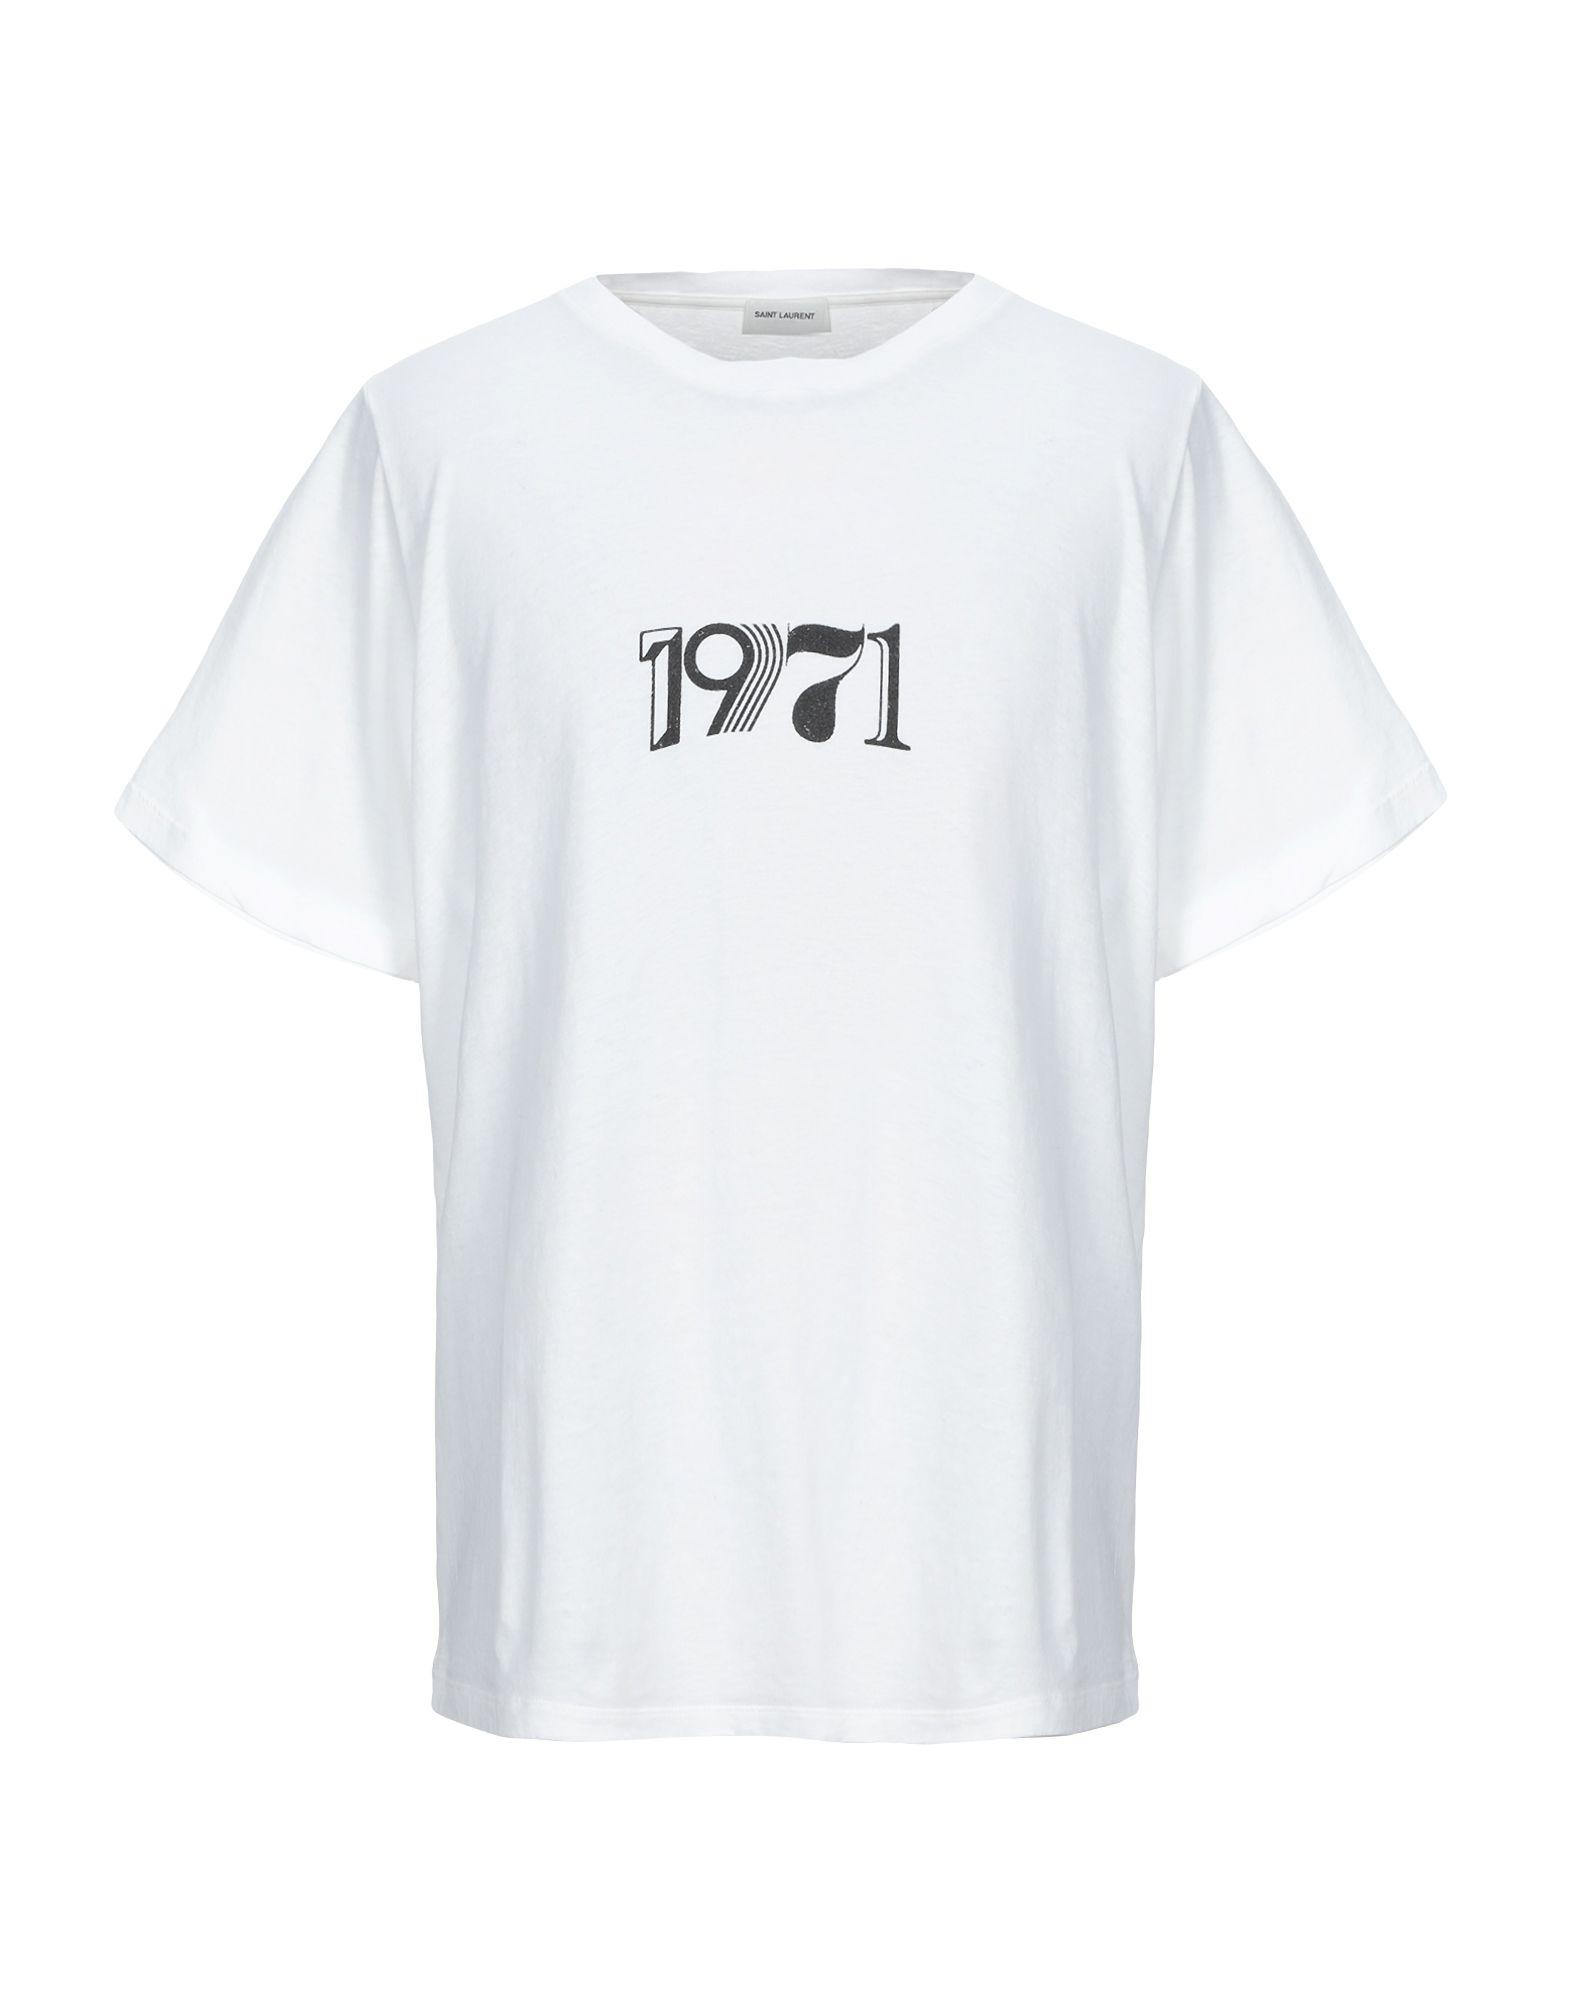 Saint Laurent Cotton T-shirt in White for Men - Lyst